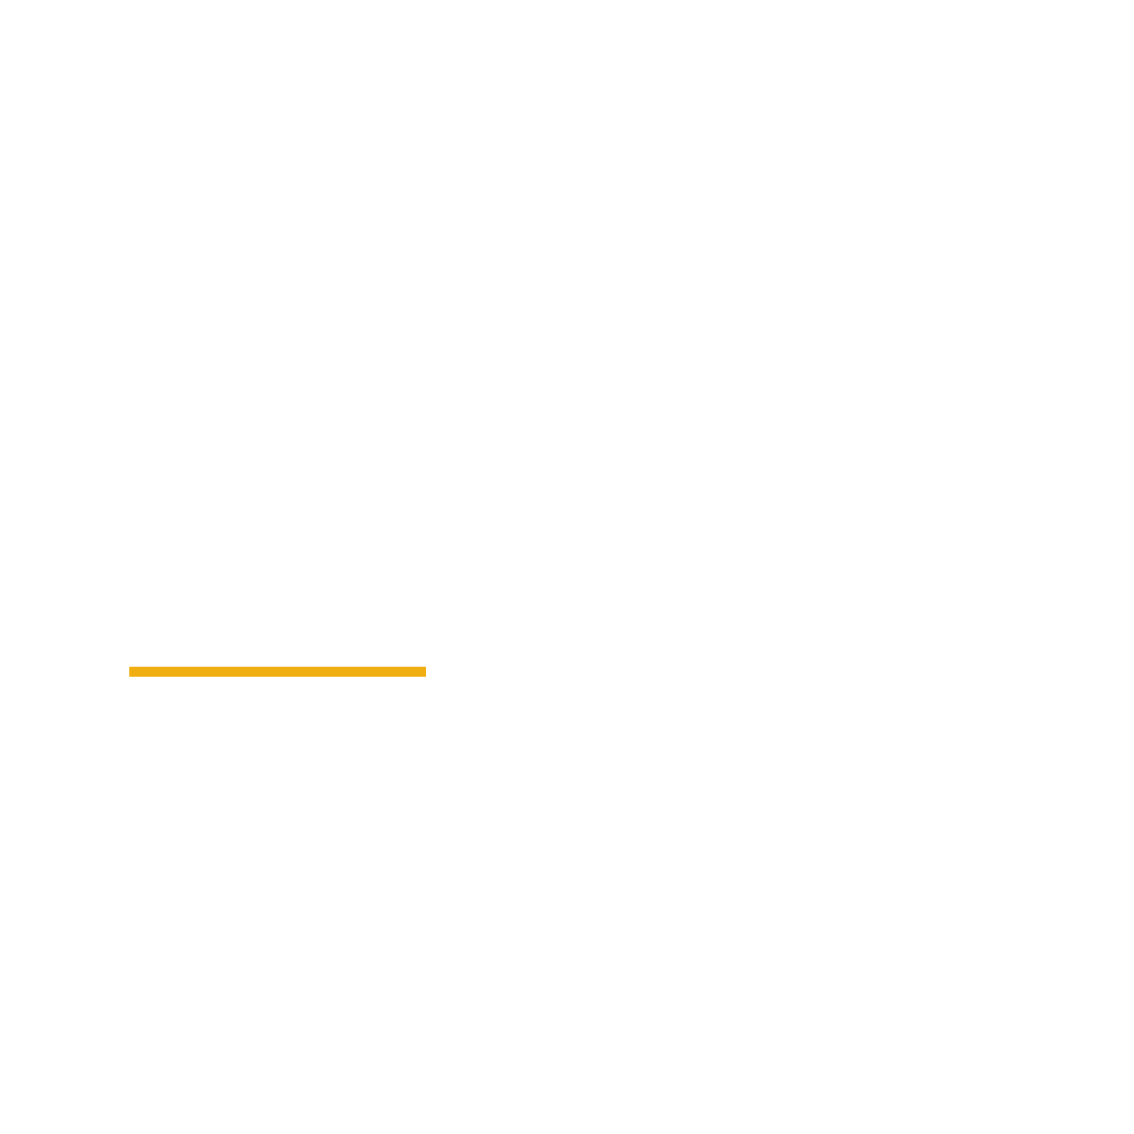 Johan Pinna